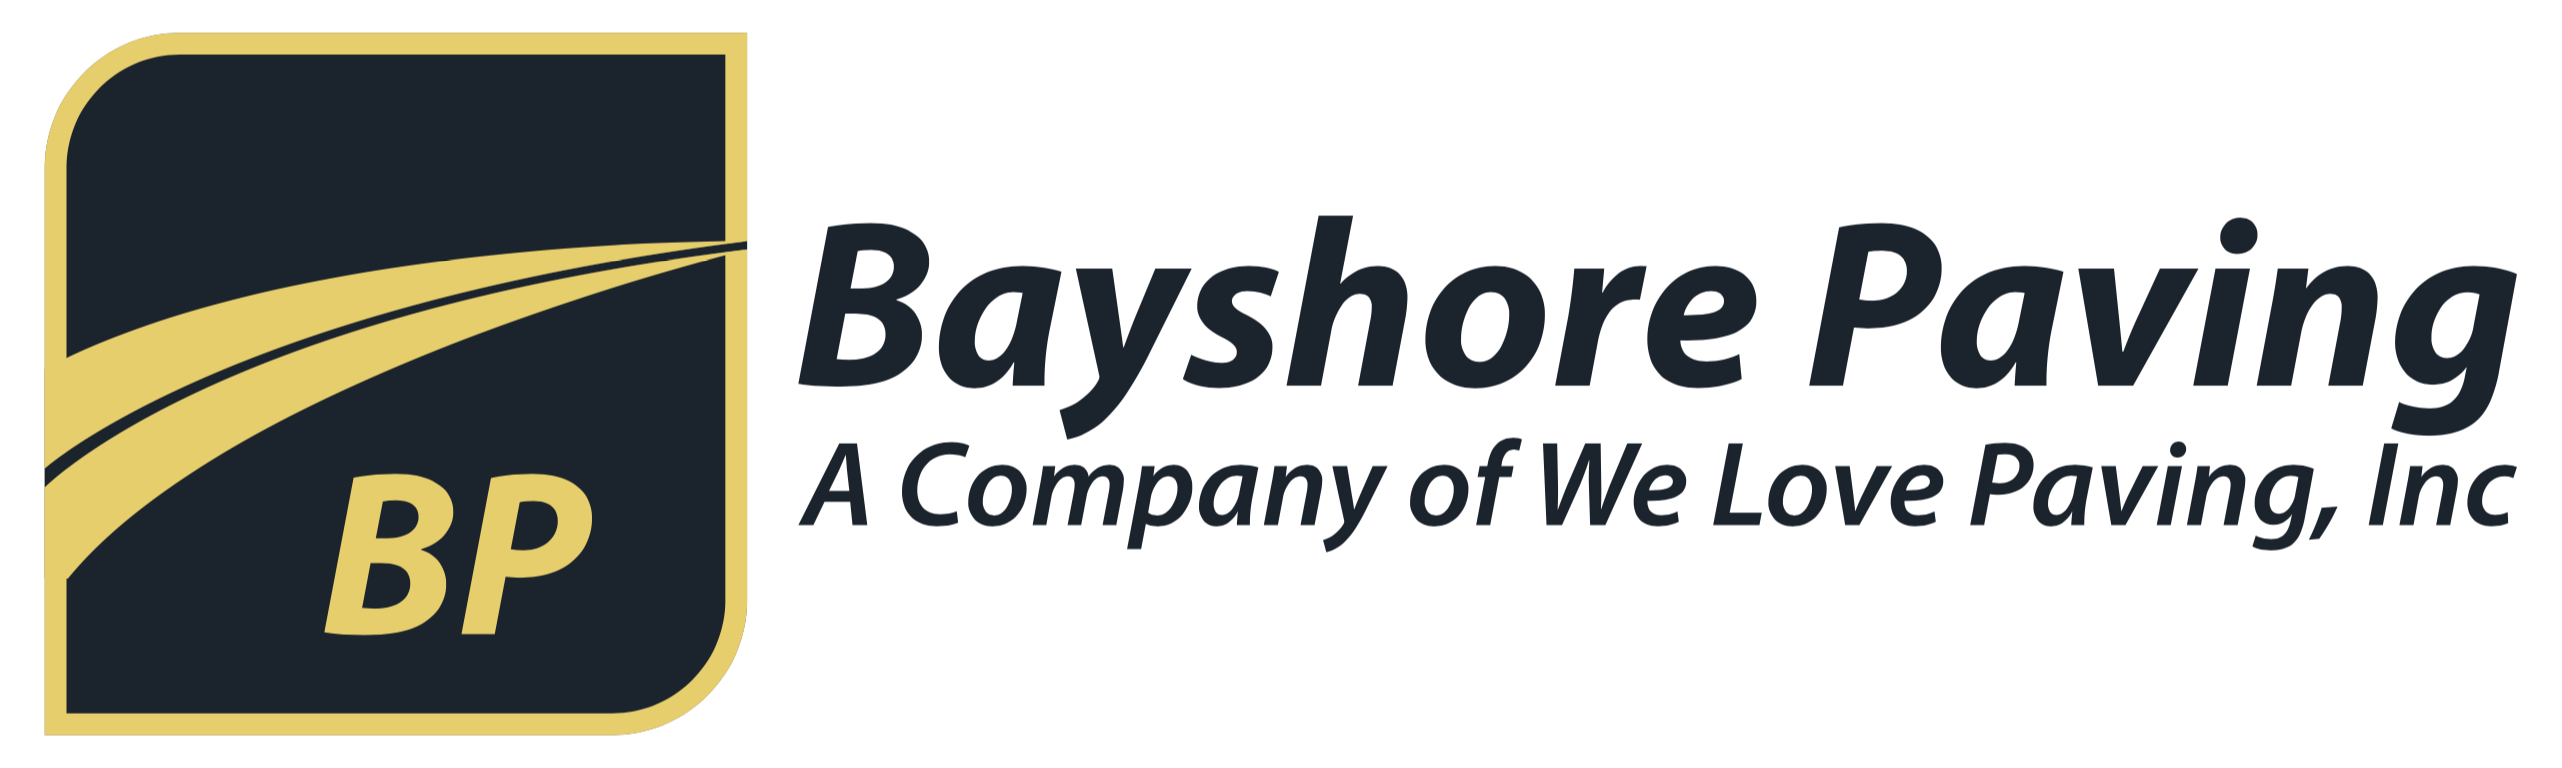 Bayshore Paving